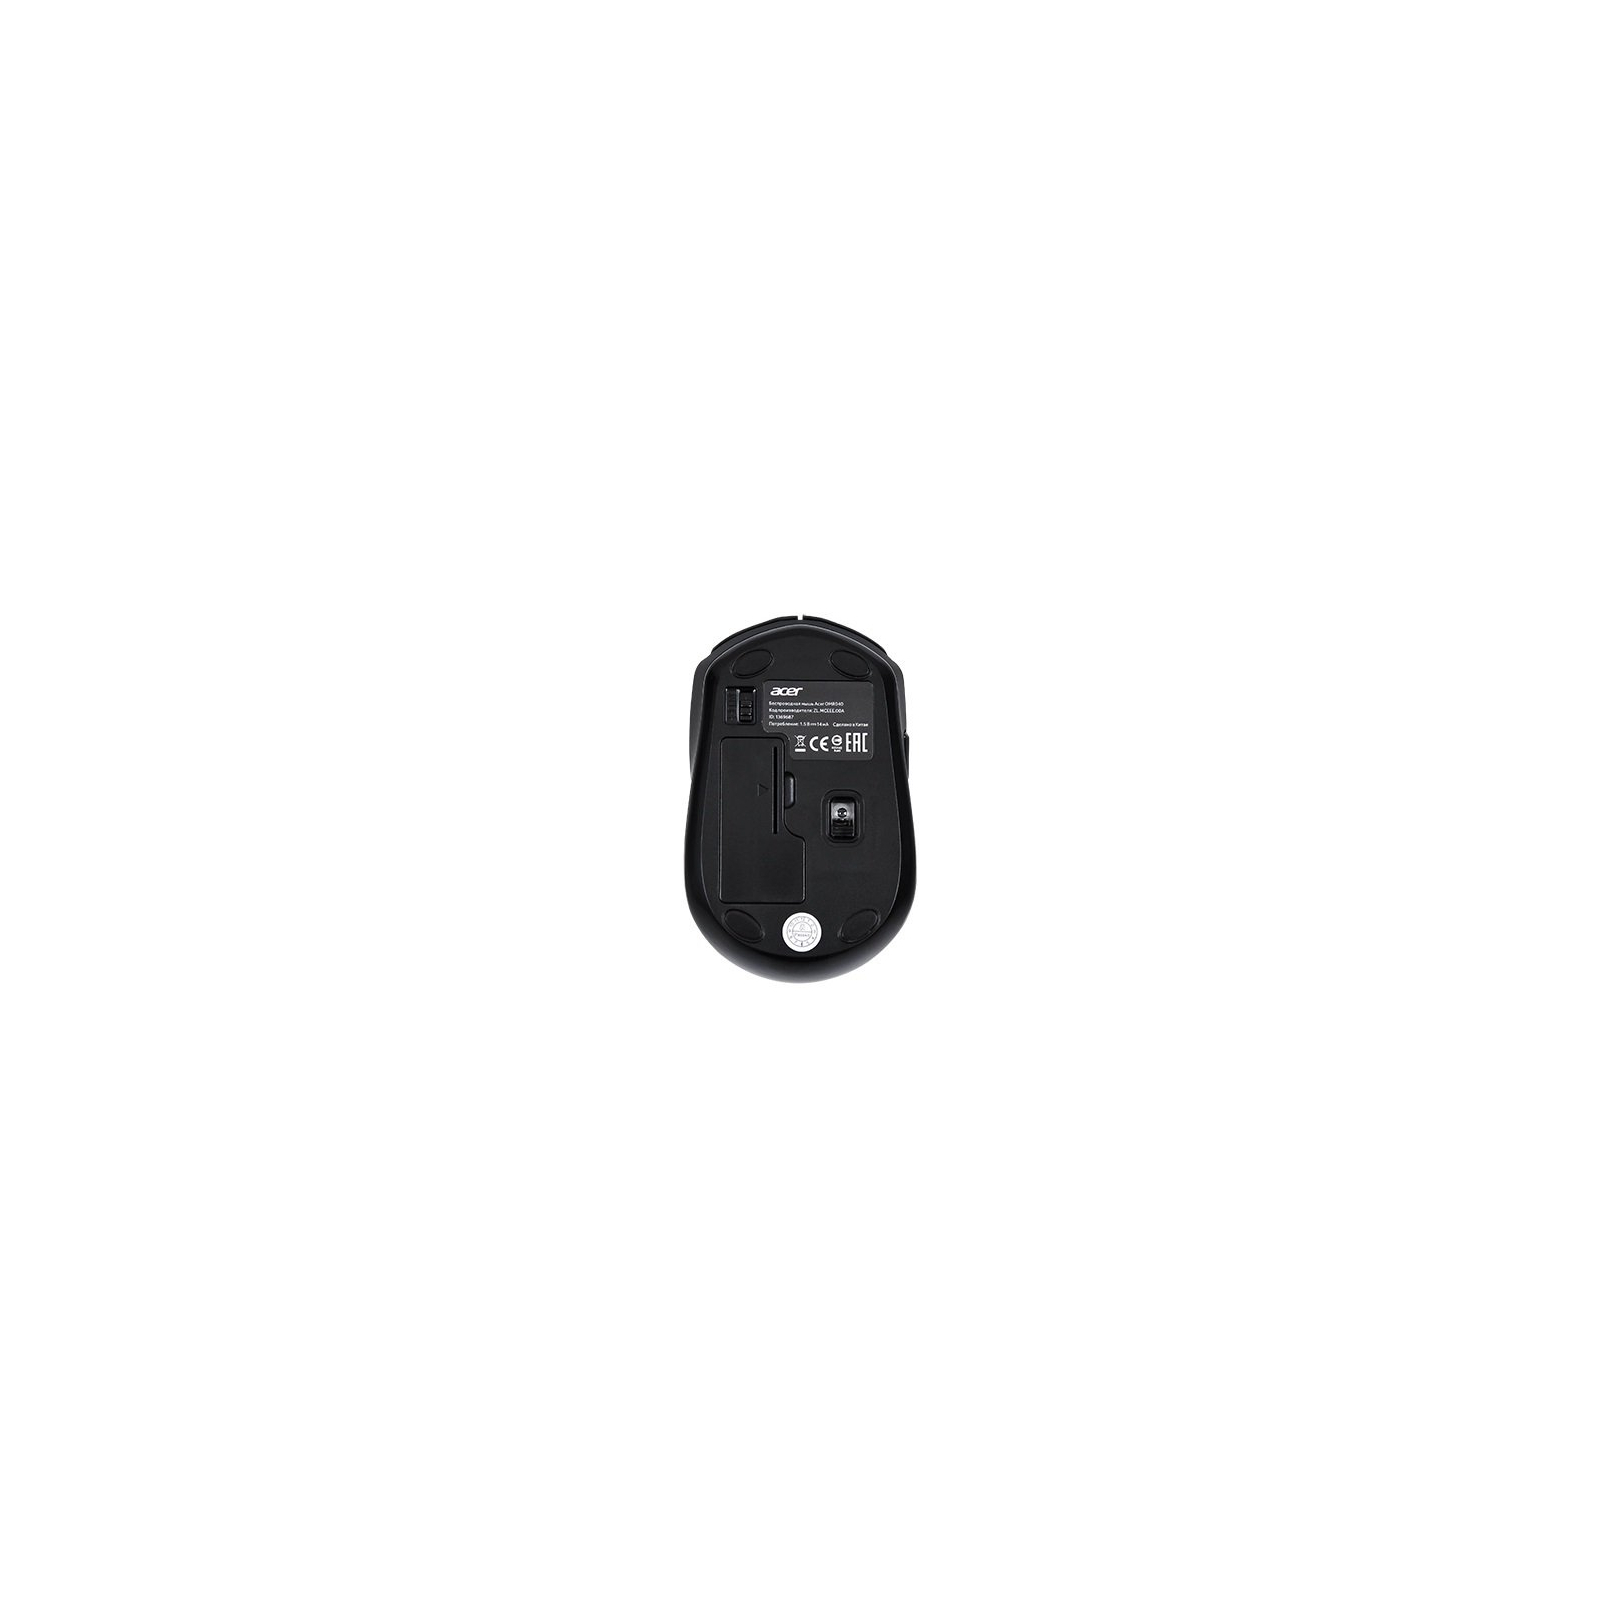 Мышка Acer OMR040 Wireless Black (ZL.MCEEE.02C) изображение 6